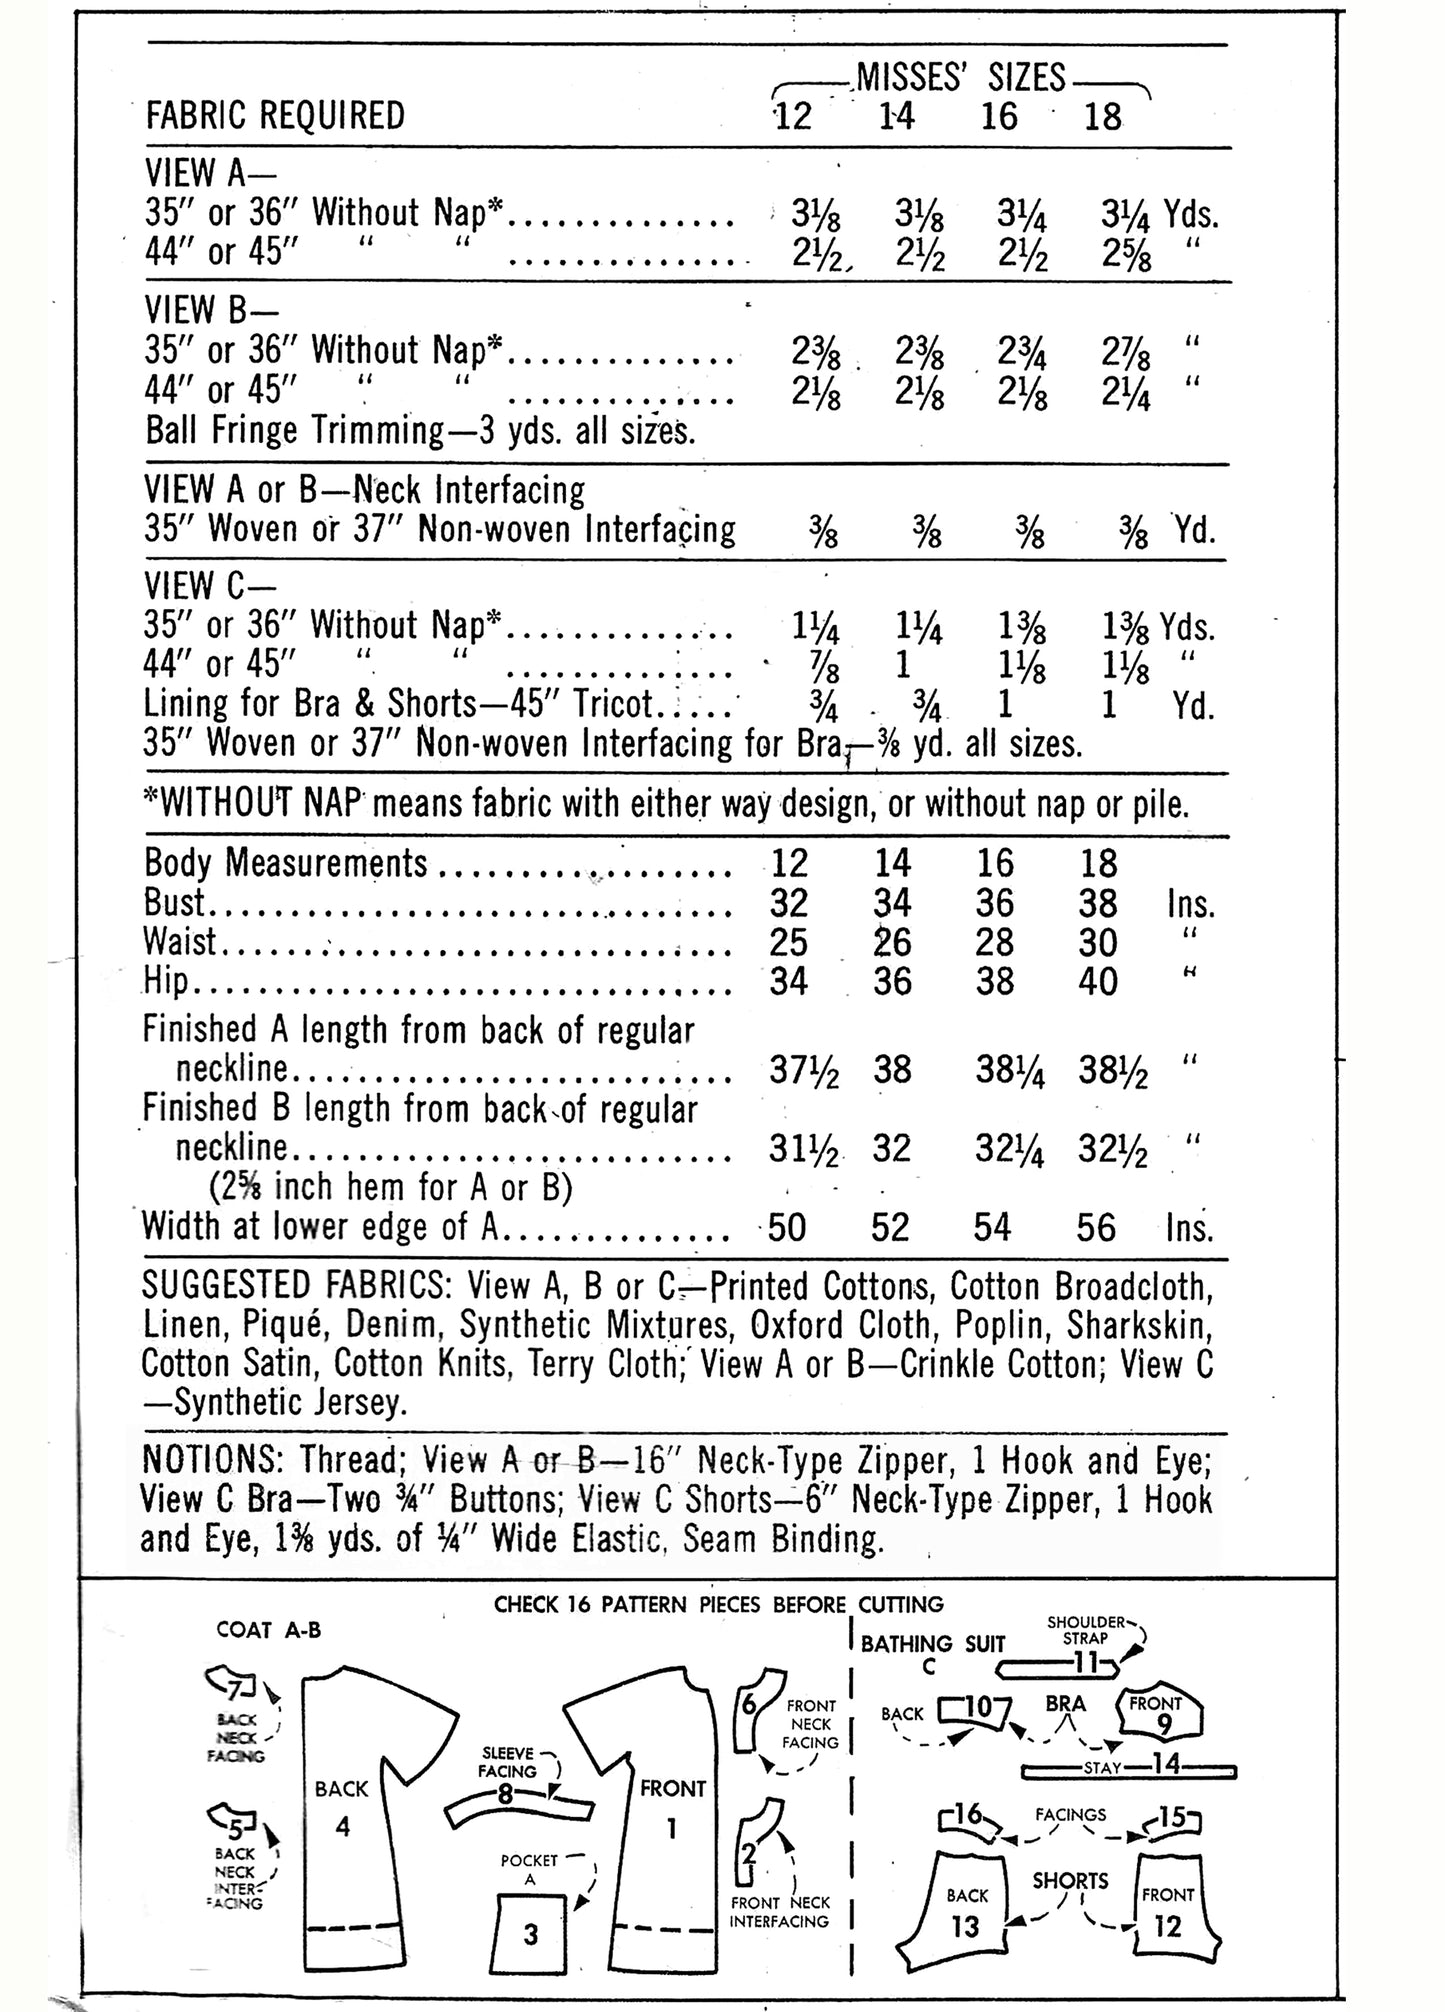 PDF Pattern - 1960s Bathing Suit & Beach Jacket / Bust 36